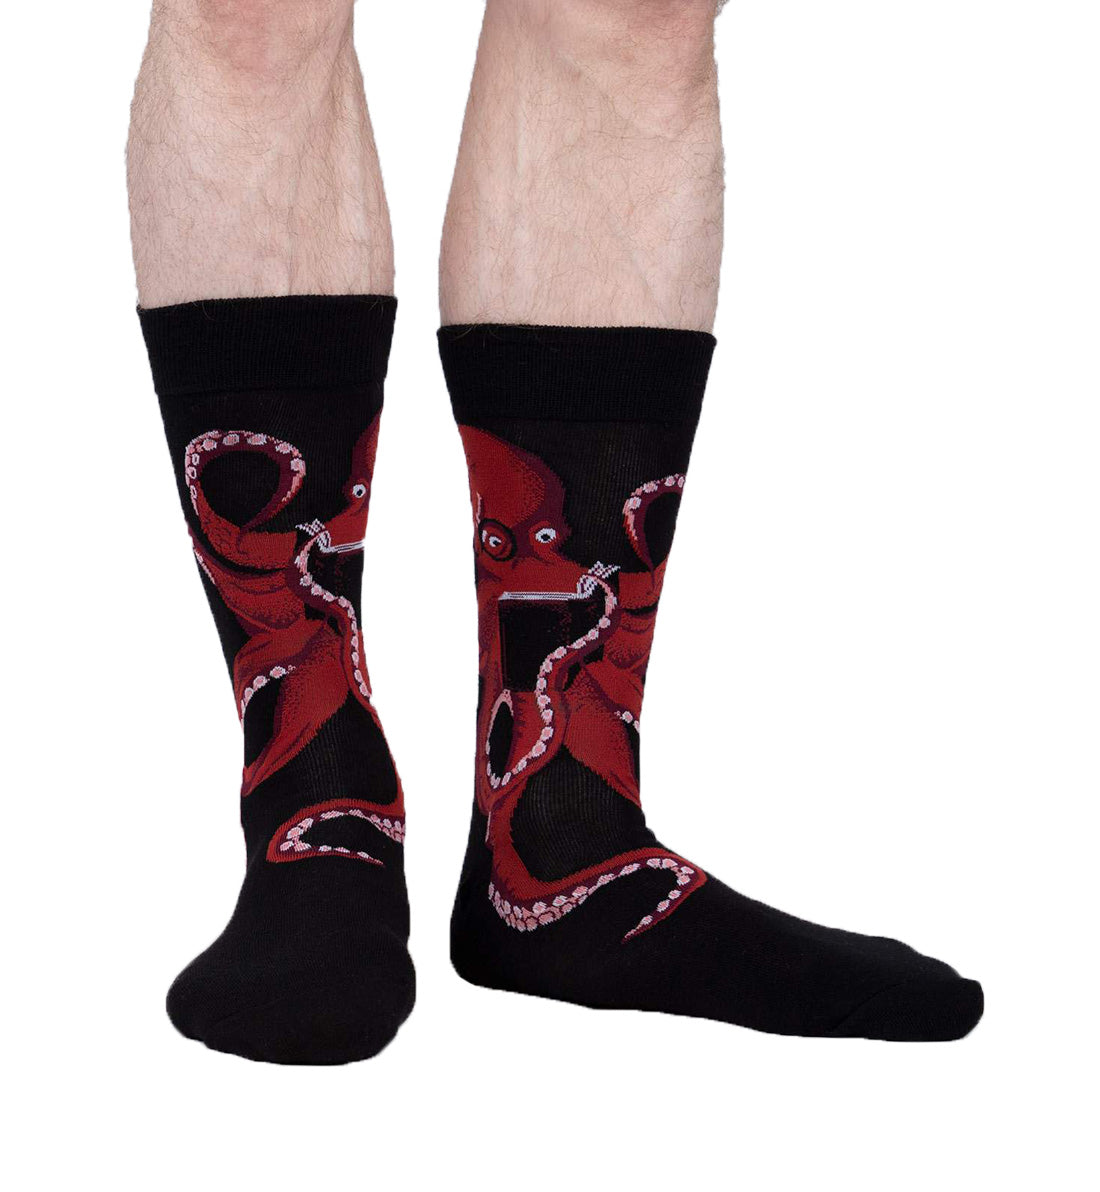 SOCK it to me Men's Crew Socks (MEF0469-1),The Octive Reader (Black) - The Octive Reader (Black),One Size